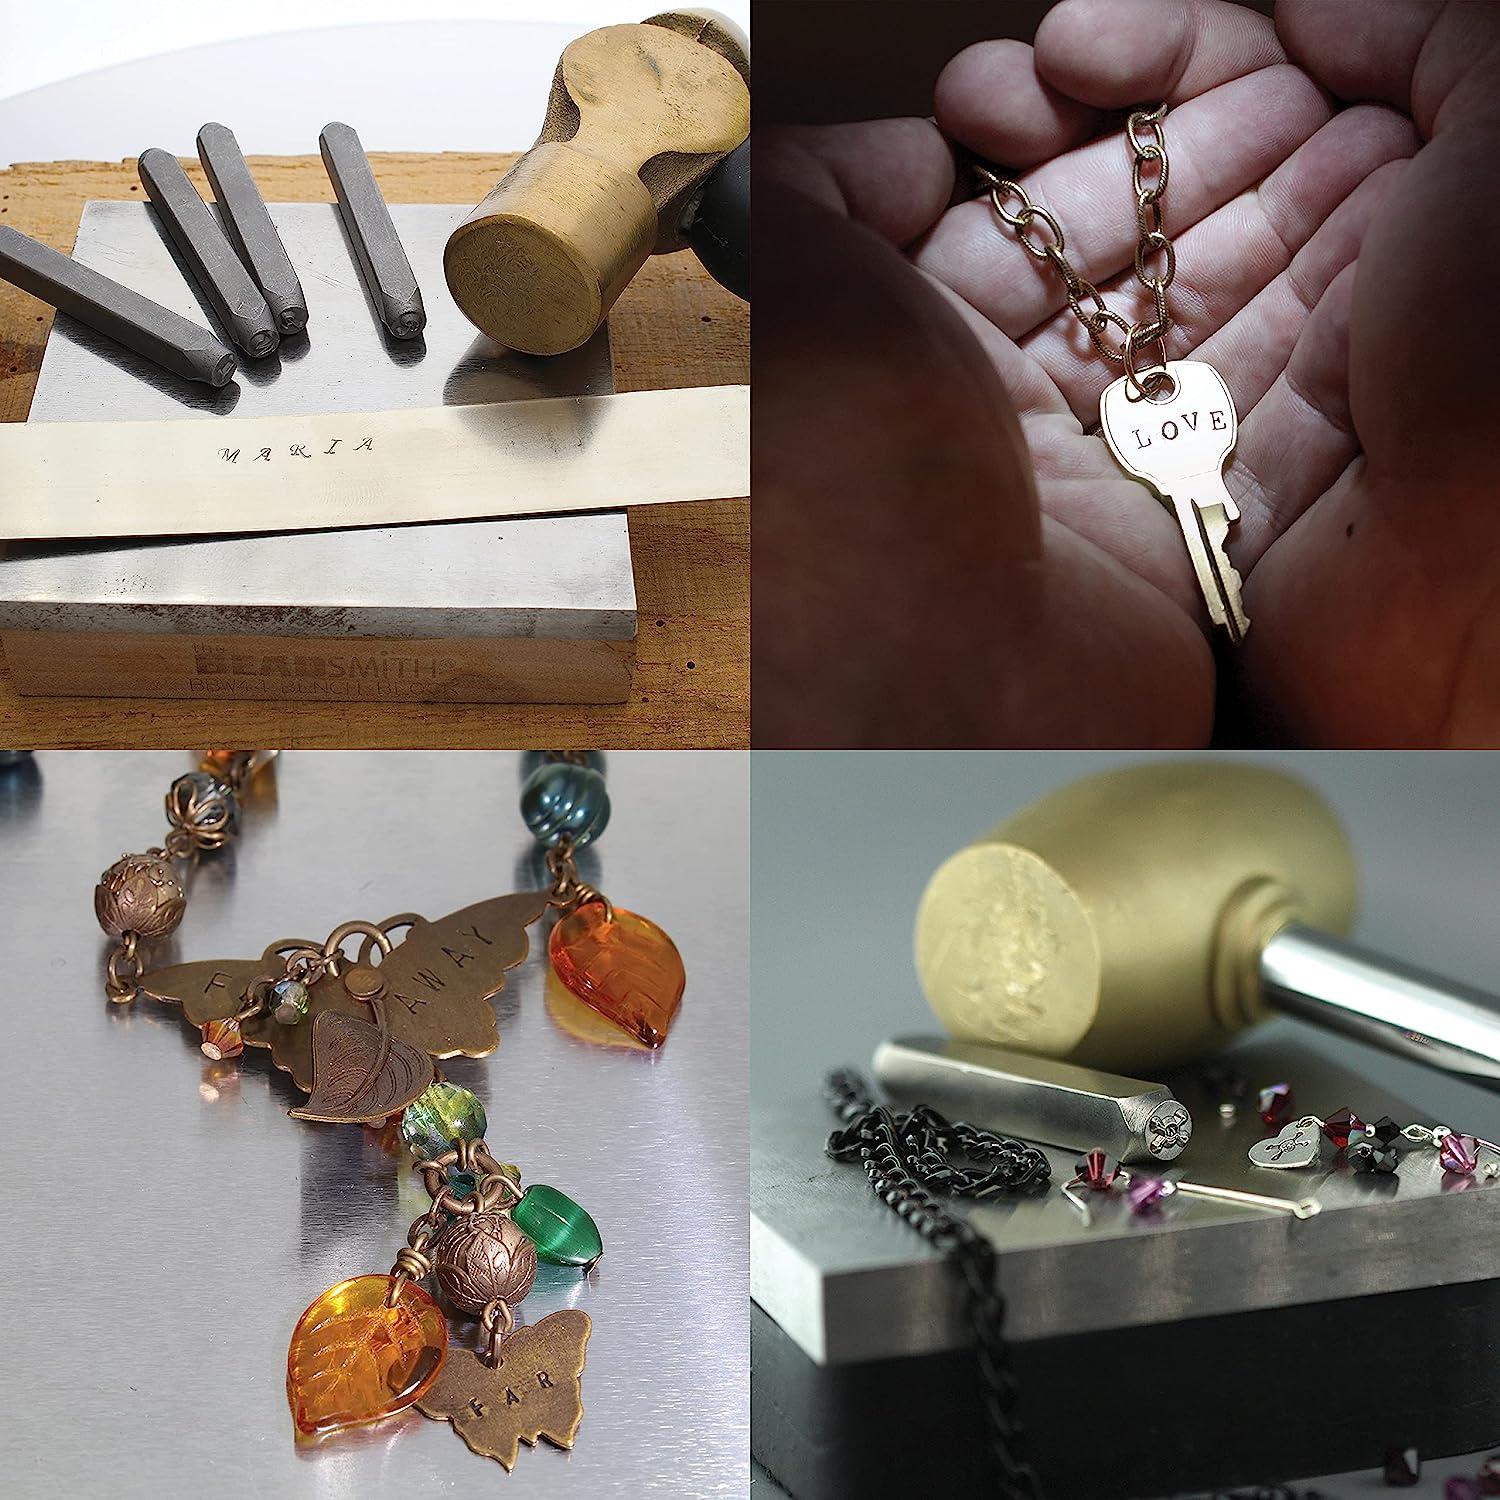  Steel Bench Block and Metal Stamping Hammer Kit, No-Rebound  Metal Bench Block, Jewelry Stamping Hammer, Jewelry Metal Stamping Tools  for Jewelry Making & Metal Stamping : Arts, Crafts & Sewing